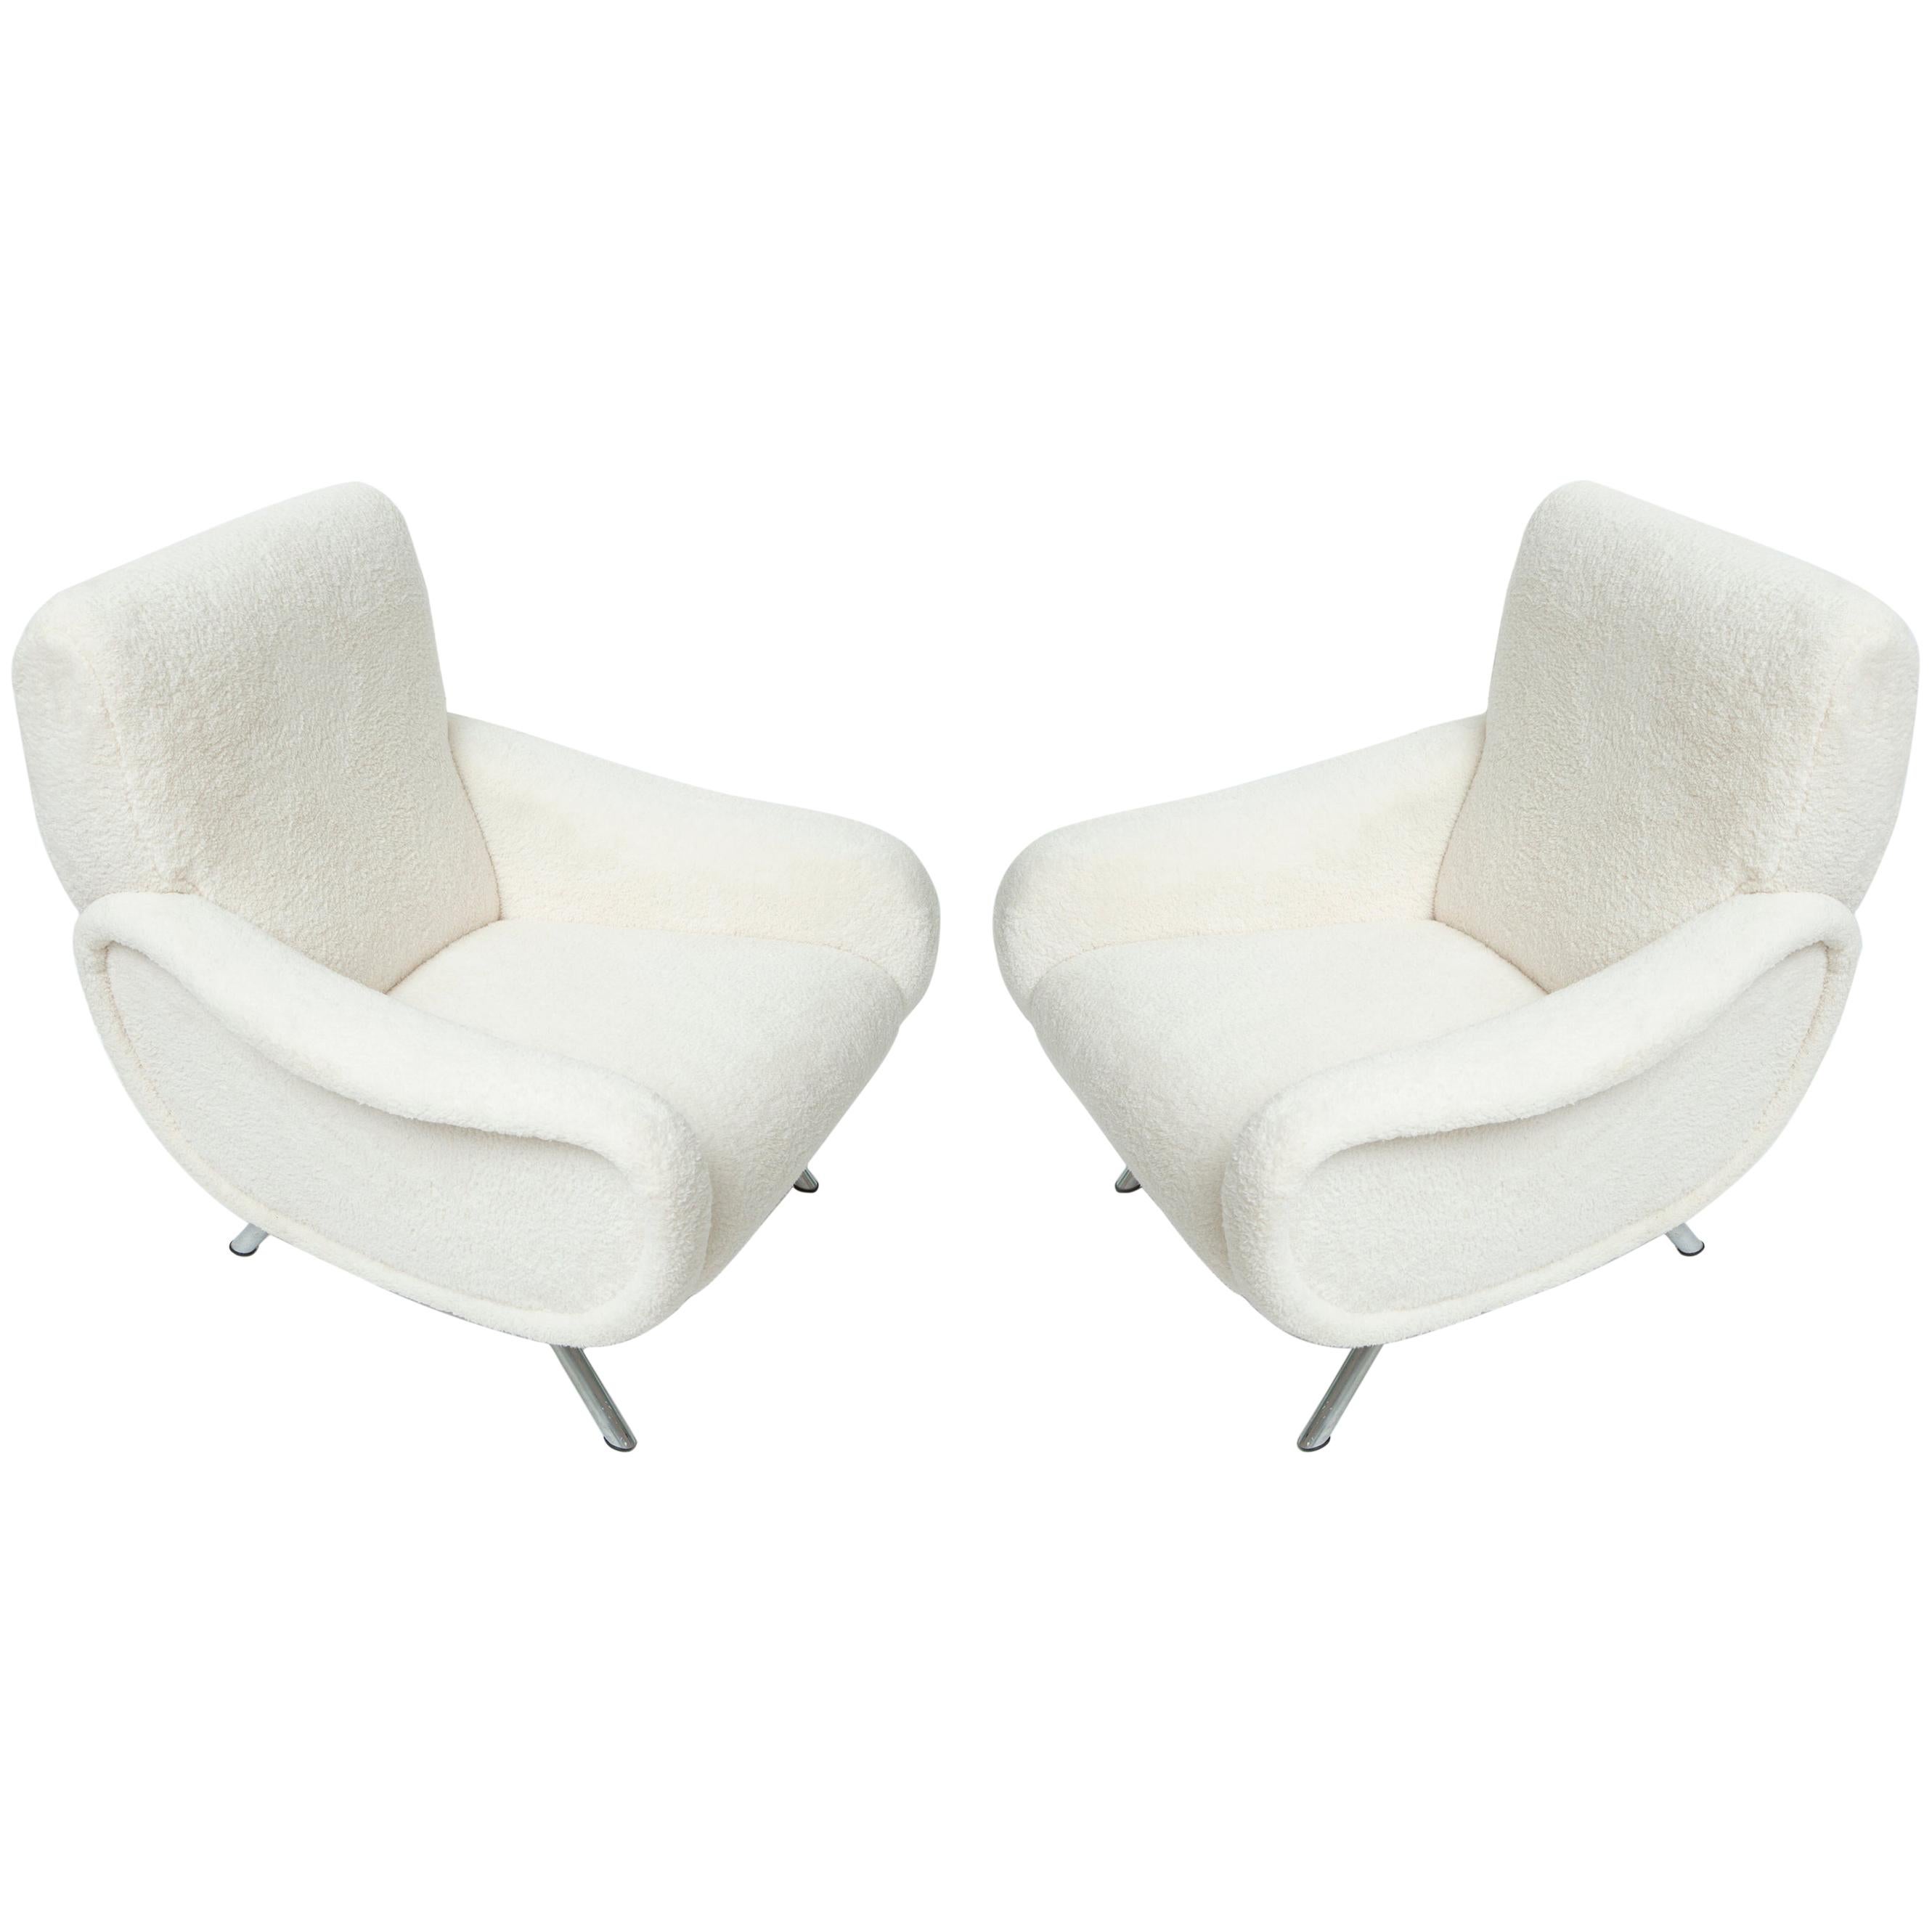 Marco Zanuso Lady Chairs